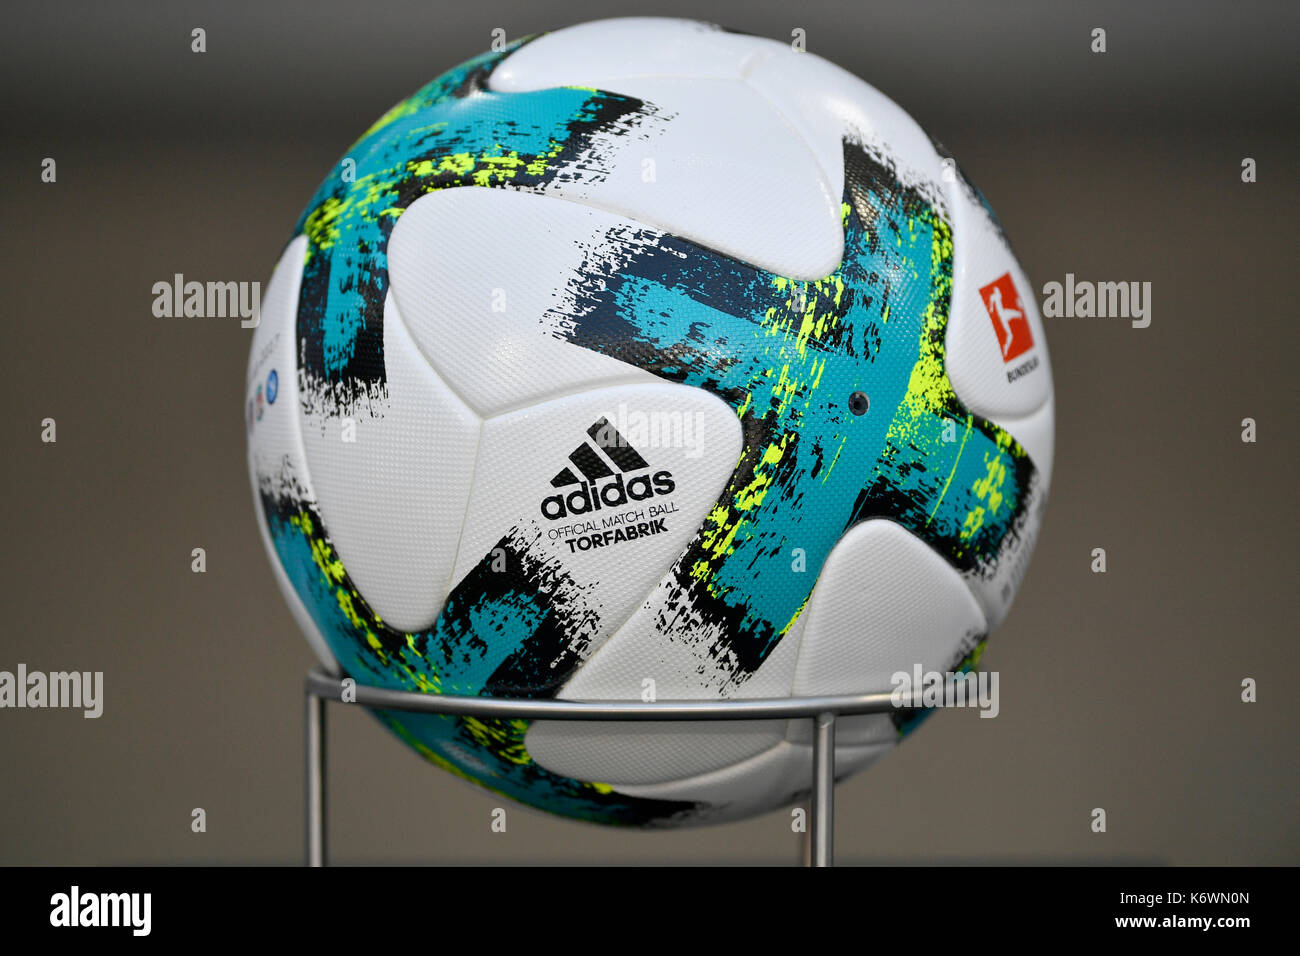 Ball adidas High Resolution Stock Photography and Images - Alamy